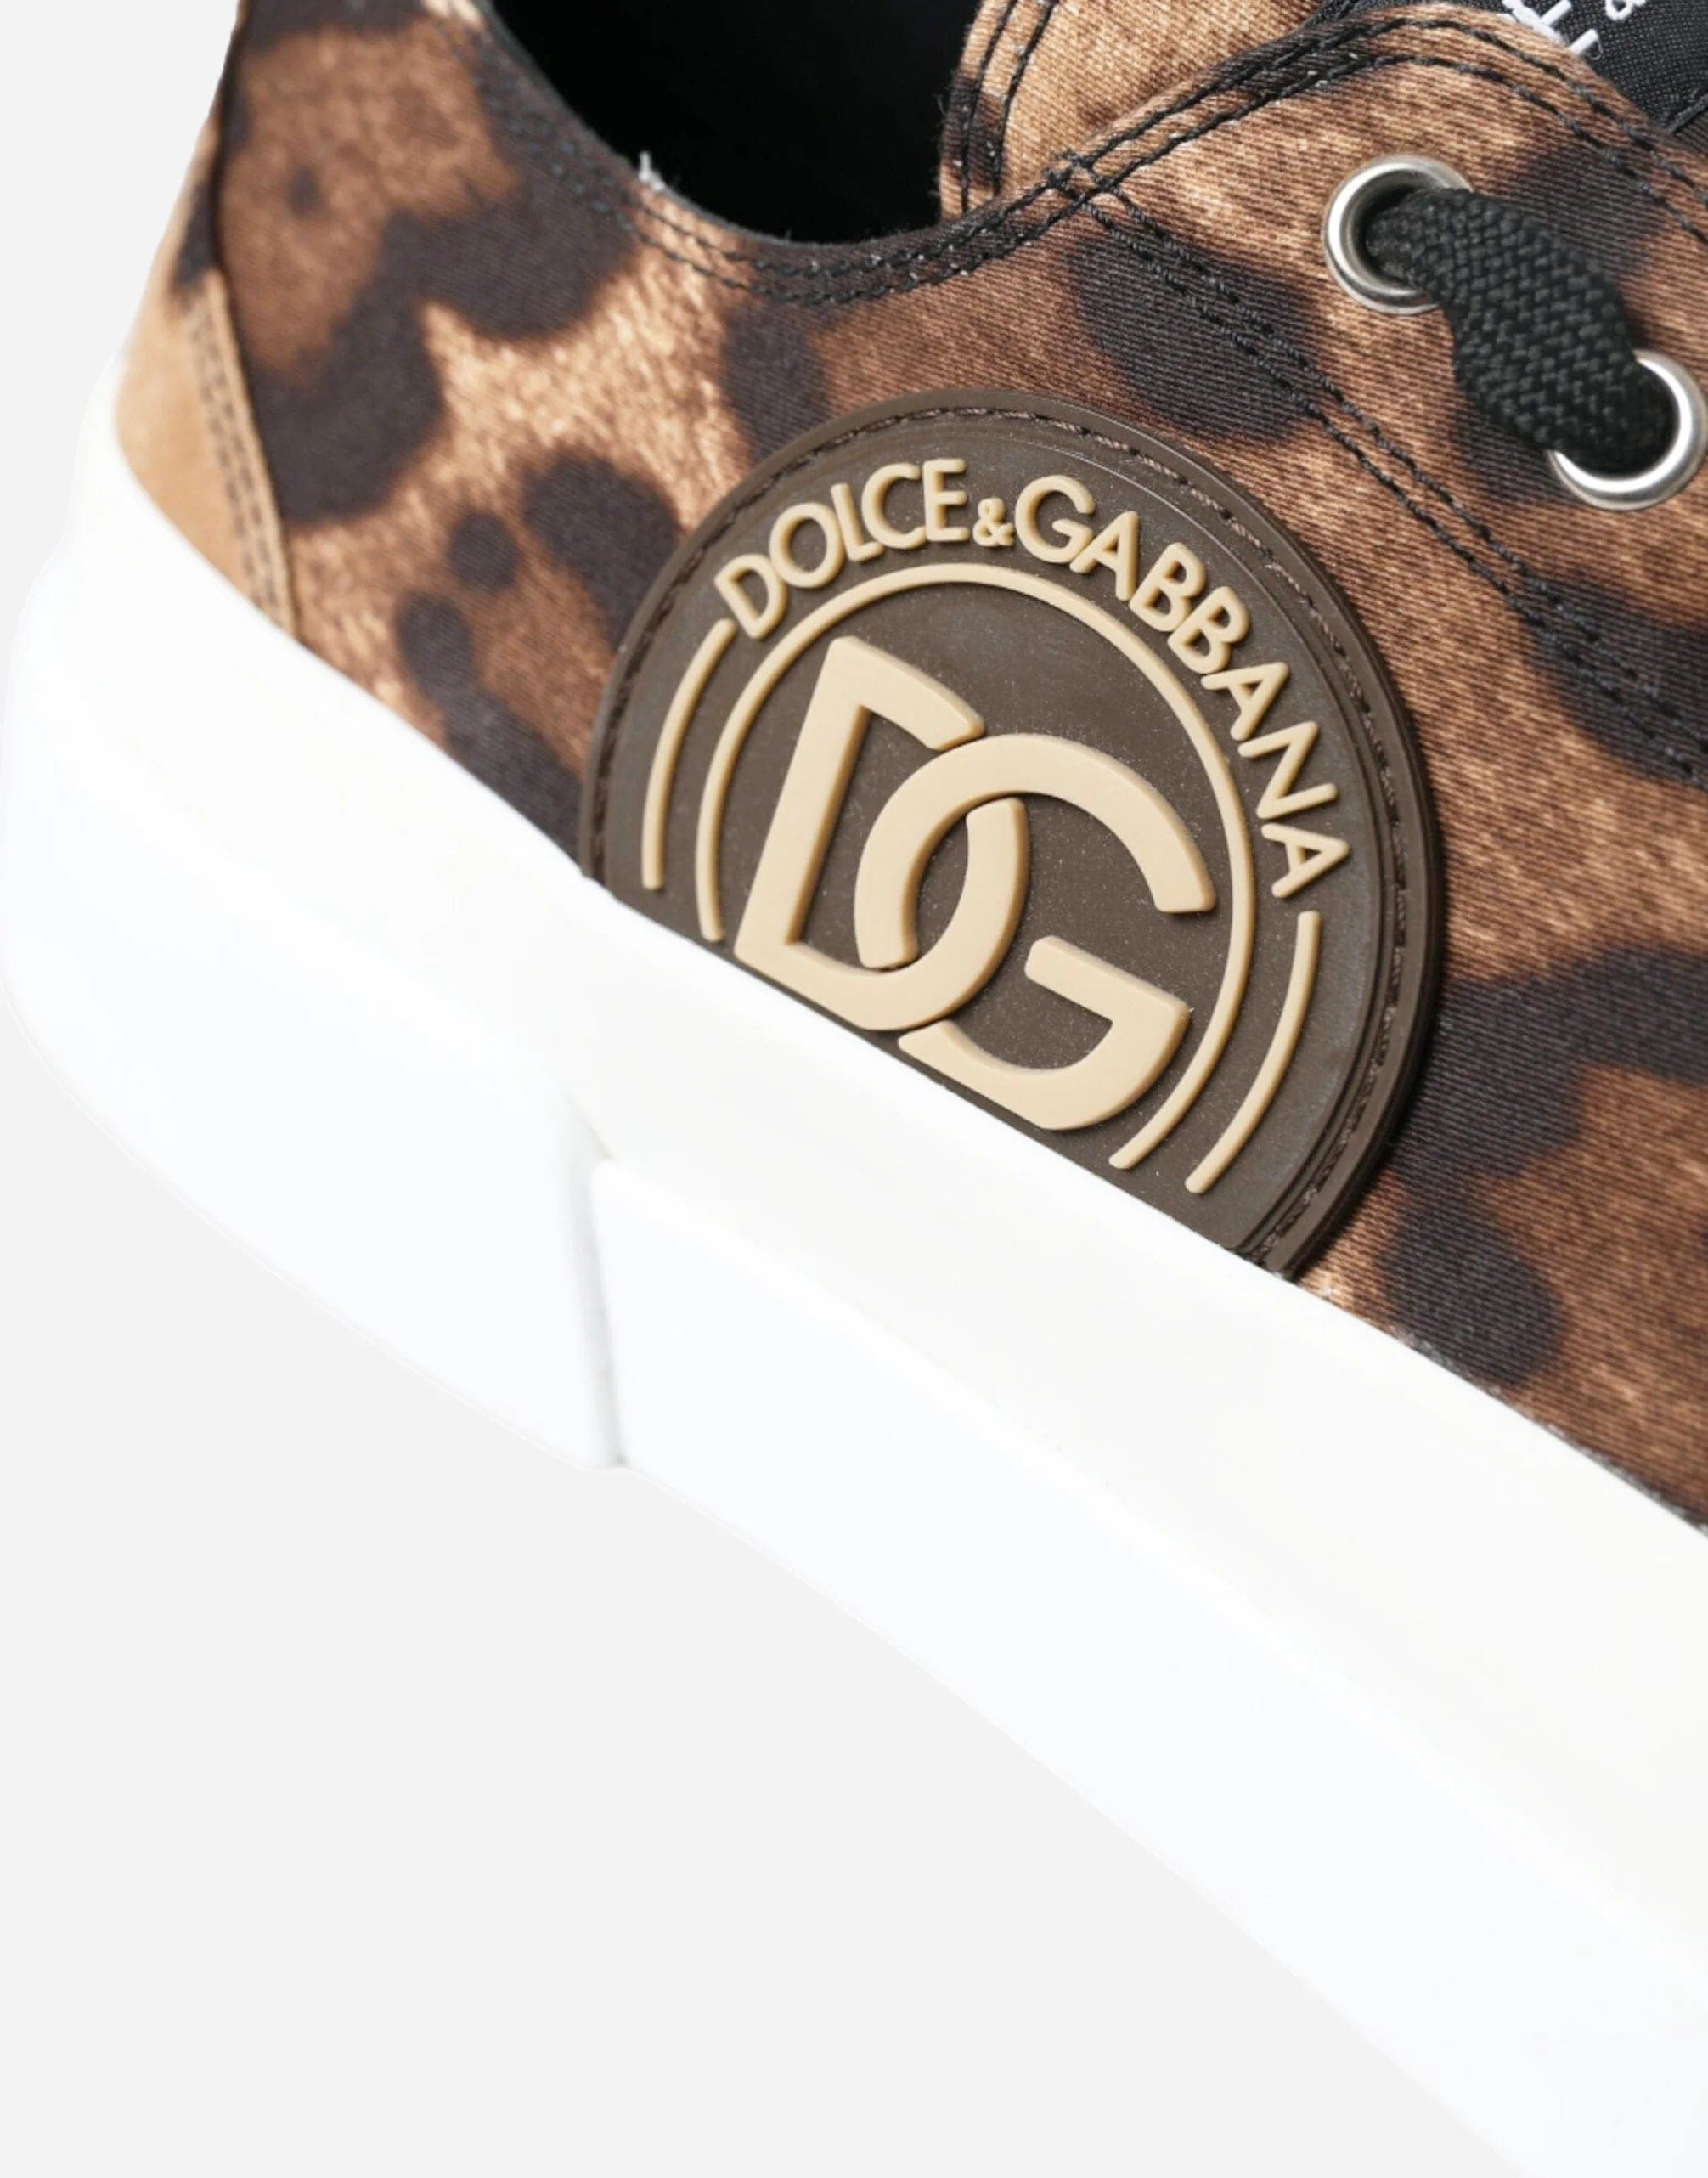 Sneakers basse con stampa leopardata